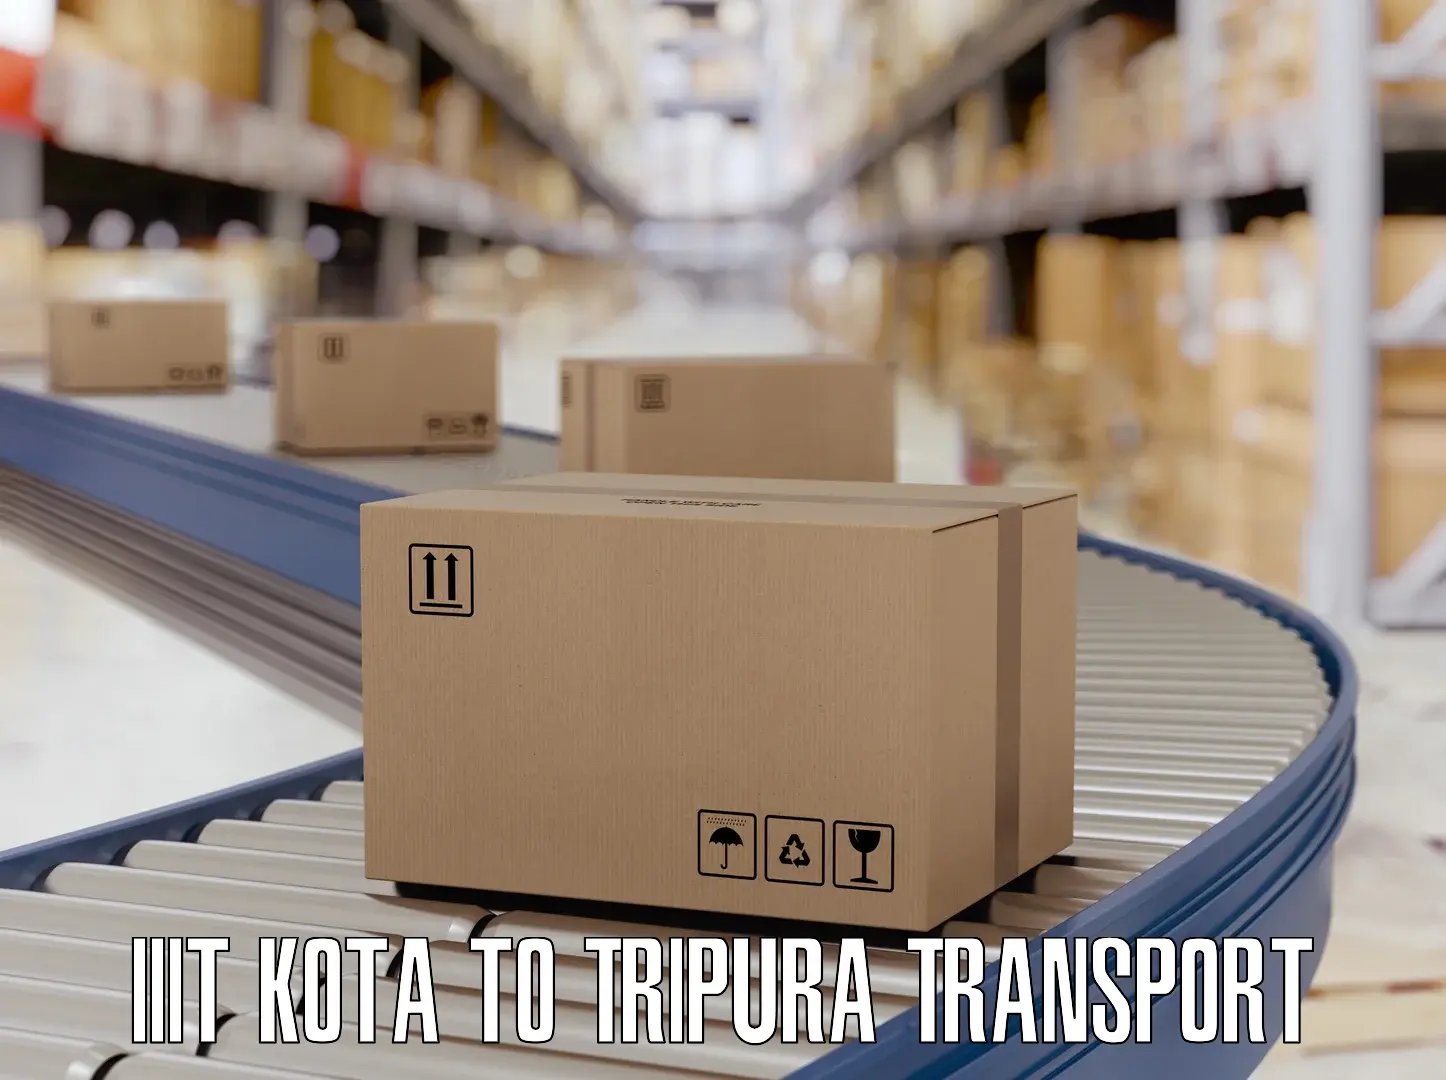 Interstate transport services IIIT Kota to Udaipur Tripura